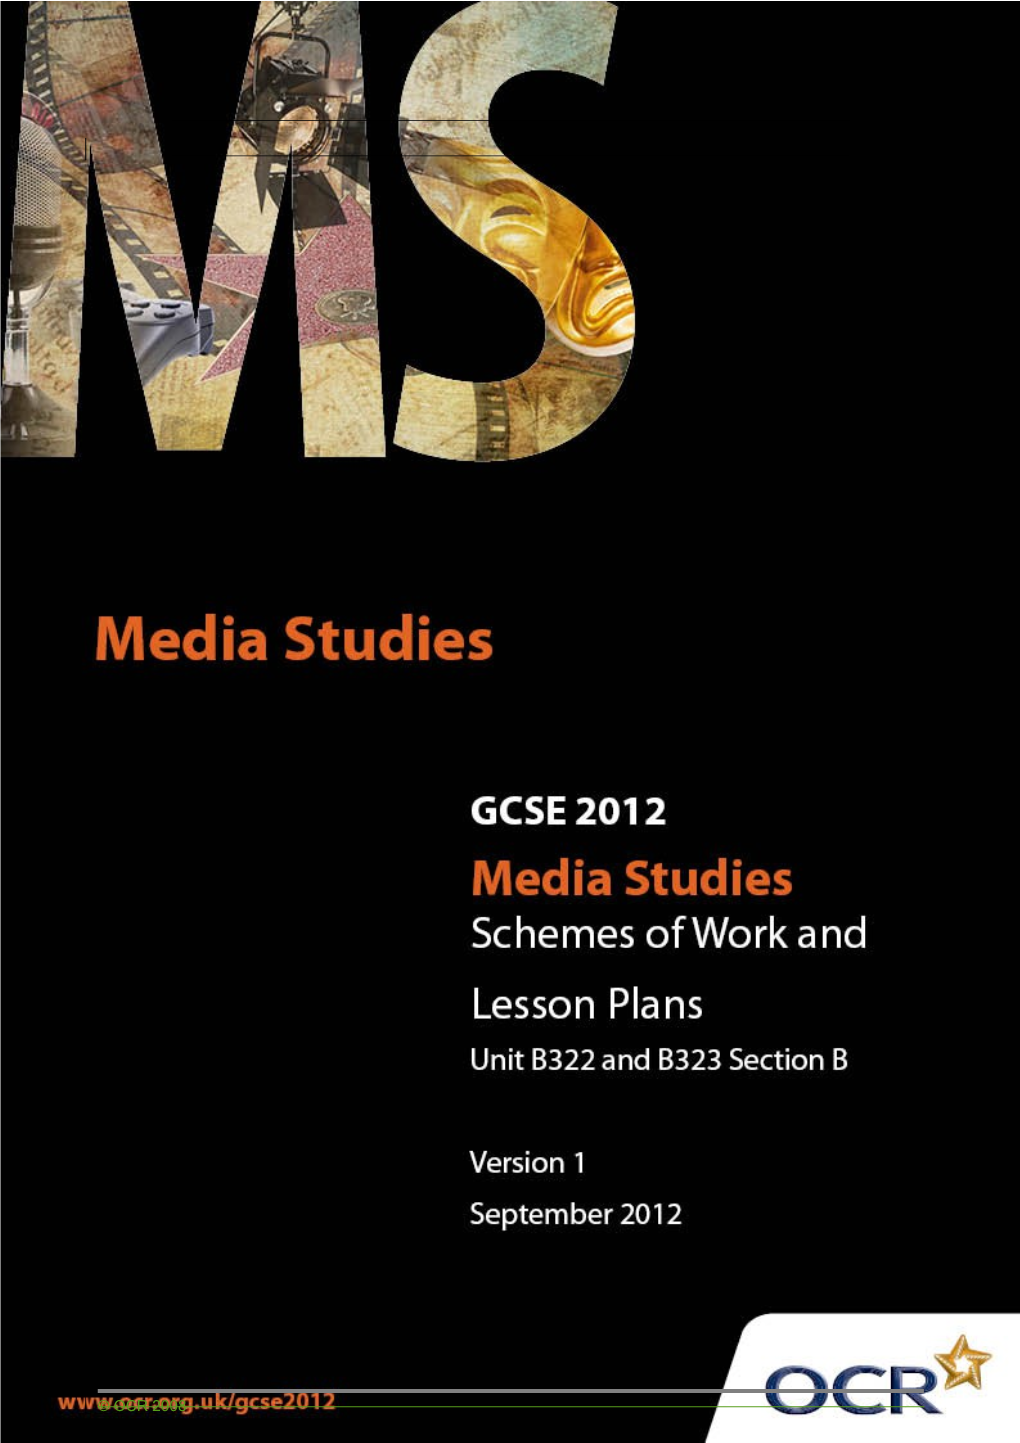 OCR GCSE Media Studies Units B322 & B323 Section B: Television Comedy5